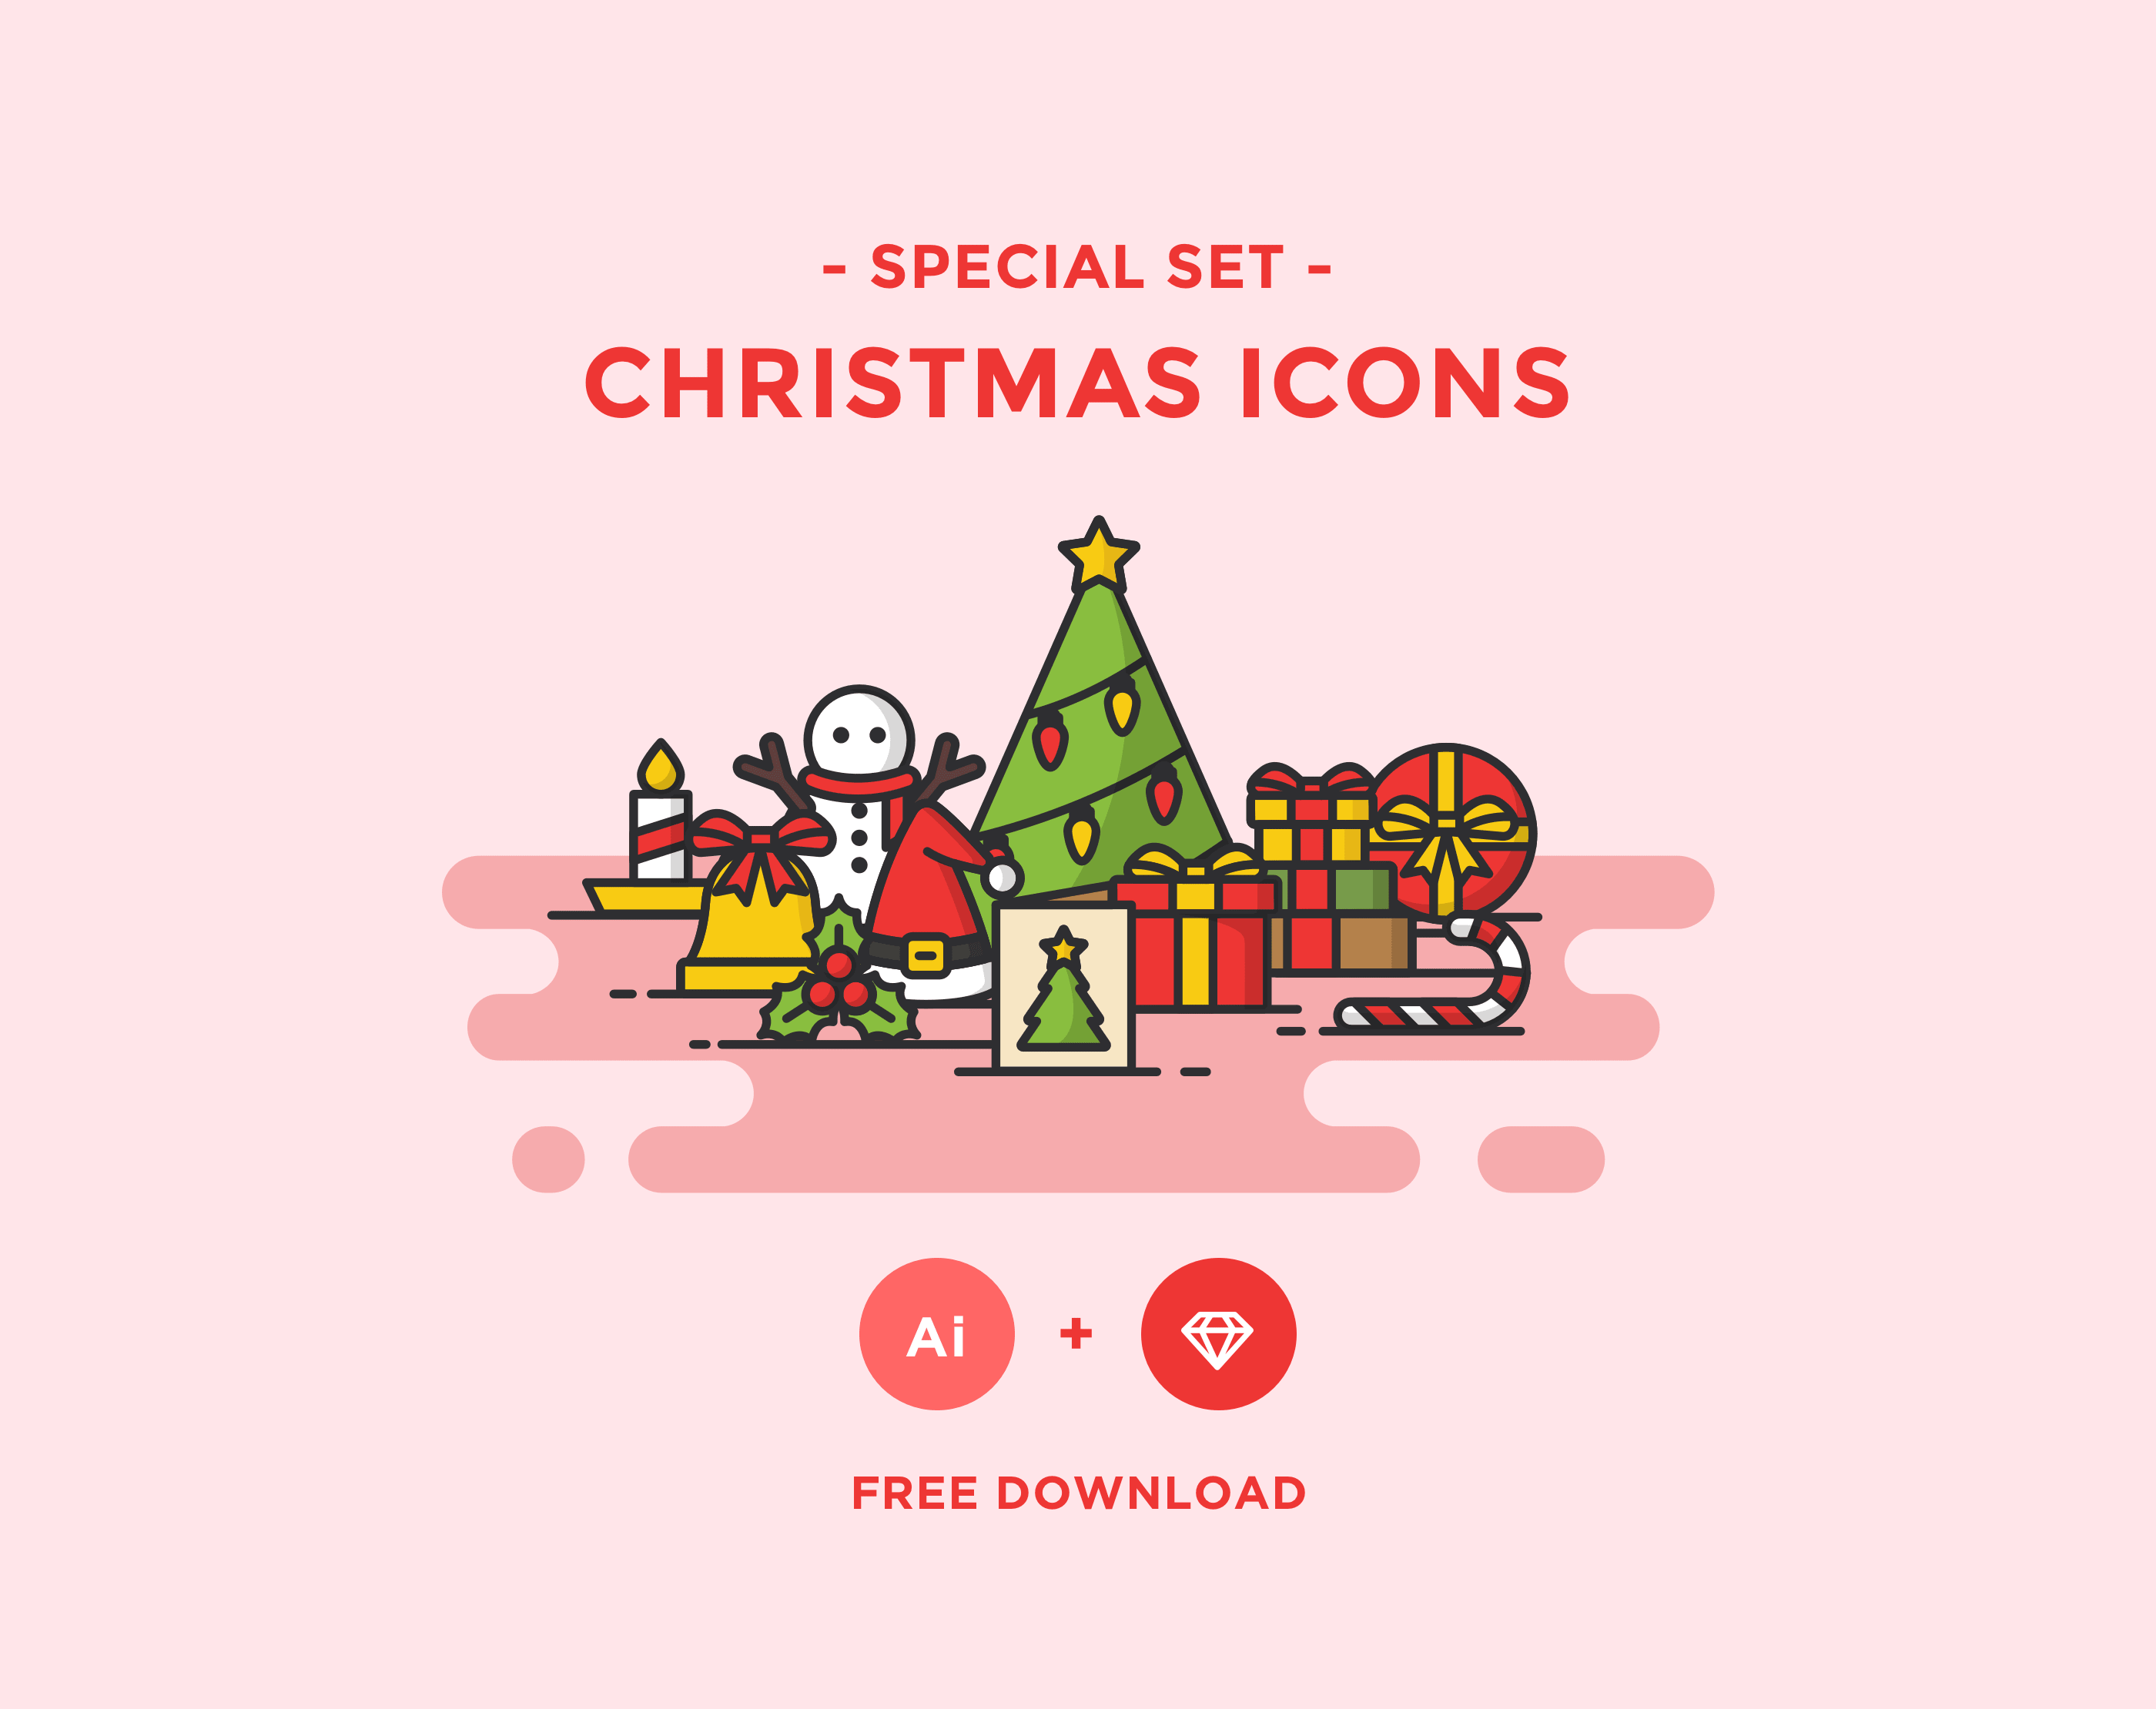 可爱矢量圣诞图标集 Free Christmas Icons插图